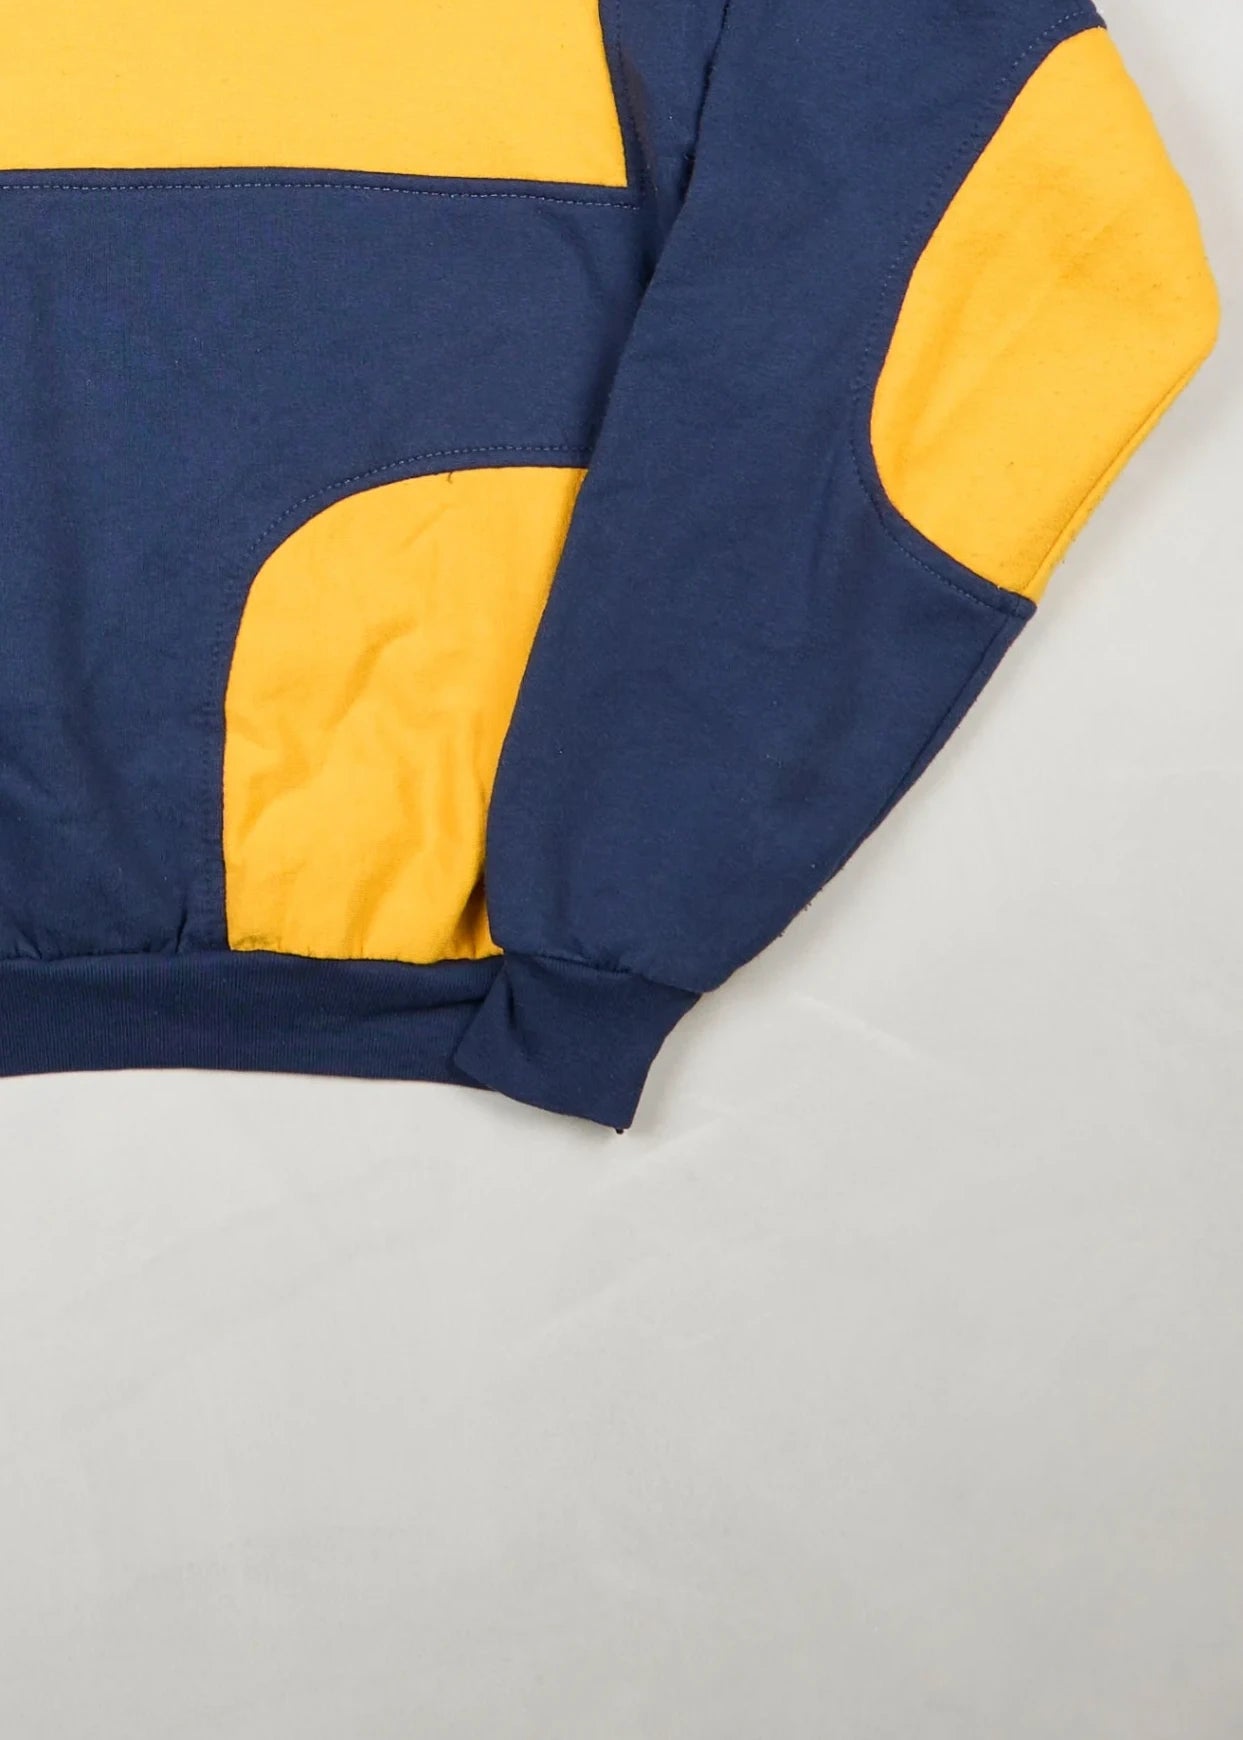 Nike - Sweatshirt (L) Bottom Right